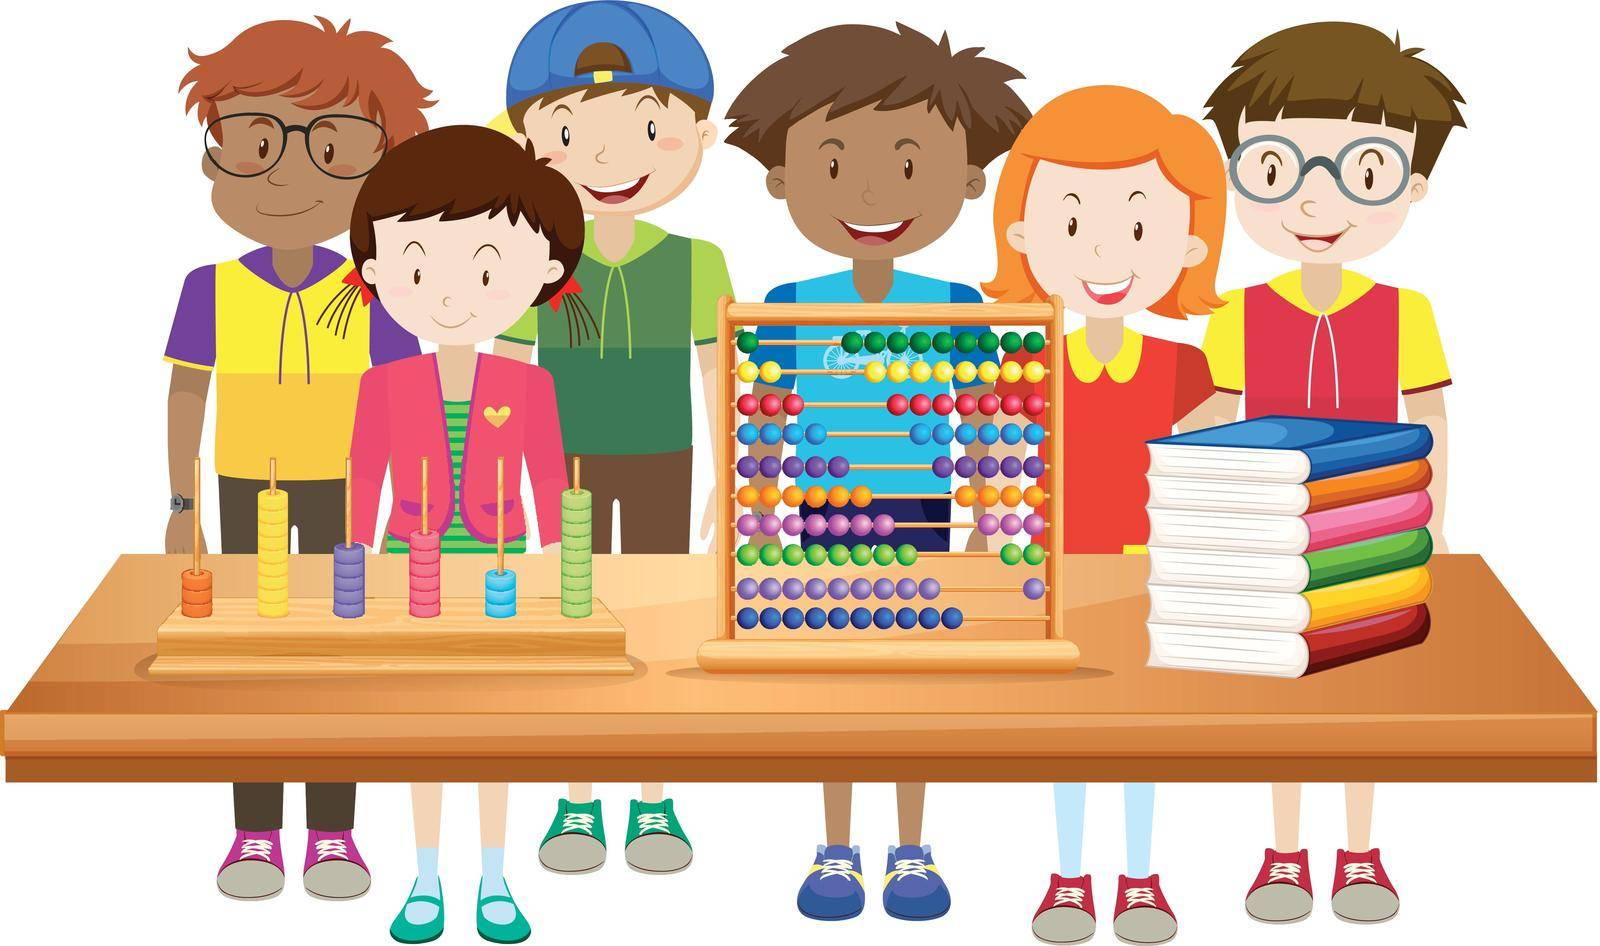 Children learning at school illustration